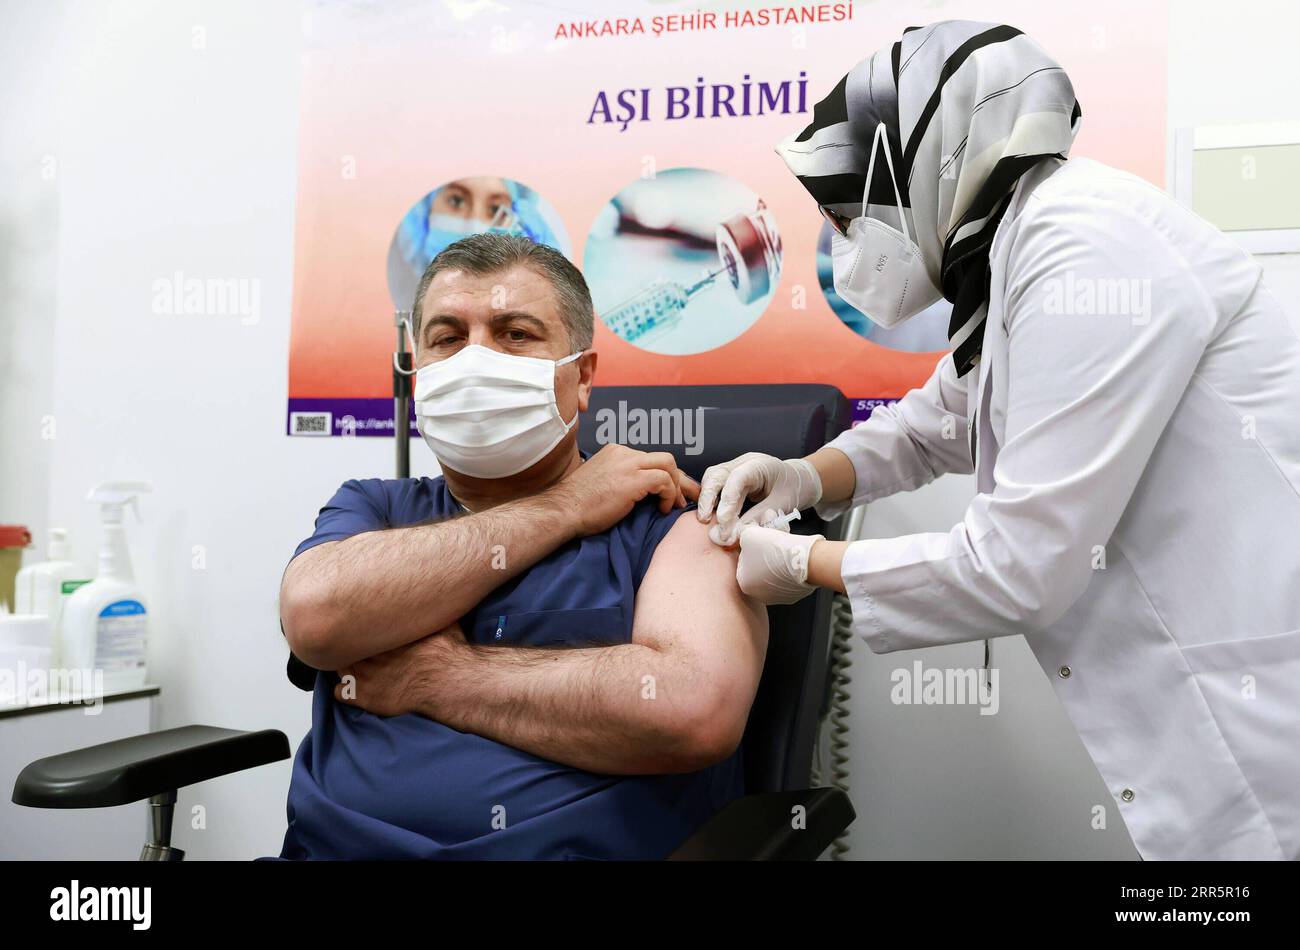 News Bilder des Tages 210114 -- ANKARA, Jan. 14, 2021  -- Turkish Health Minister Fahrettin Koca receives a dose of China s Sinovac COVID-19 vaccine in Ankara, Turkey, Jan. 13, 2021.  TURKEY-ANKARA-HEALTH MINISTER-SINOVAC VACCINE Xinhua PUBLICATIONxNOTxINxCHN Stock Photo